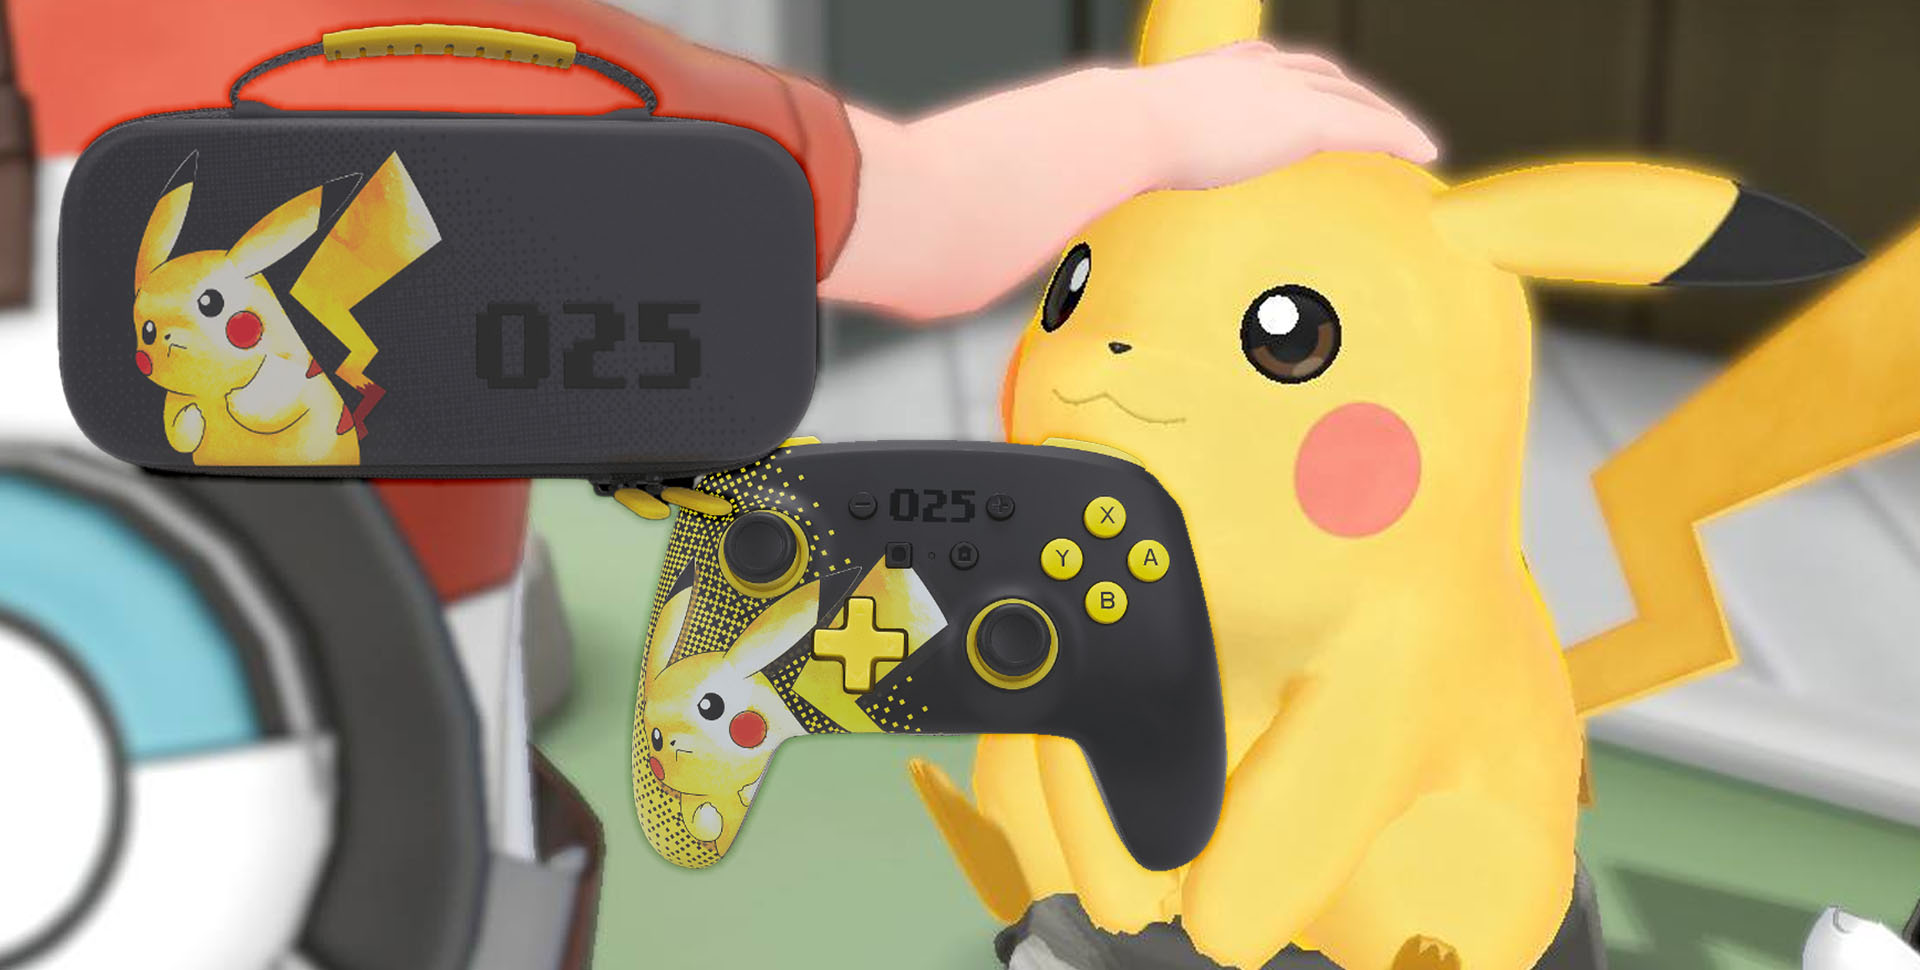 Pikachu switch wireless Controller 25th anniversary